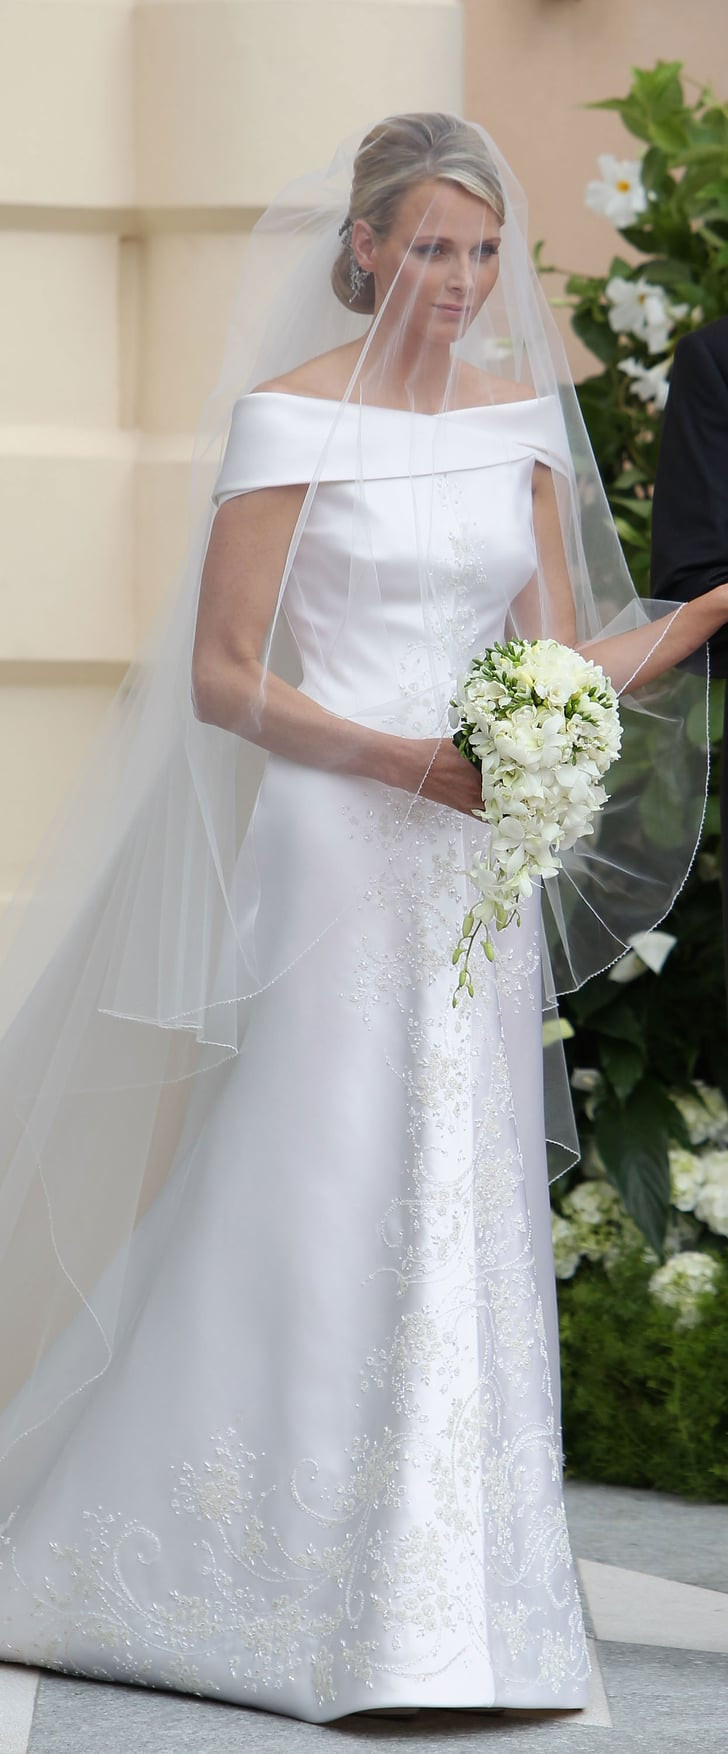 Wedding Look
 Charlene Wittstock and Prince Albert Are Married